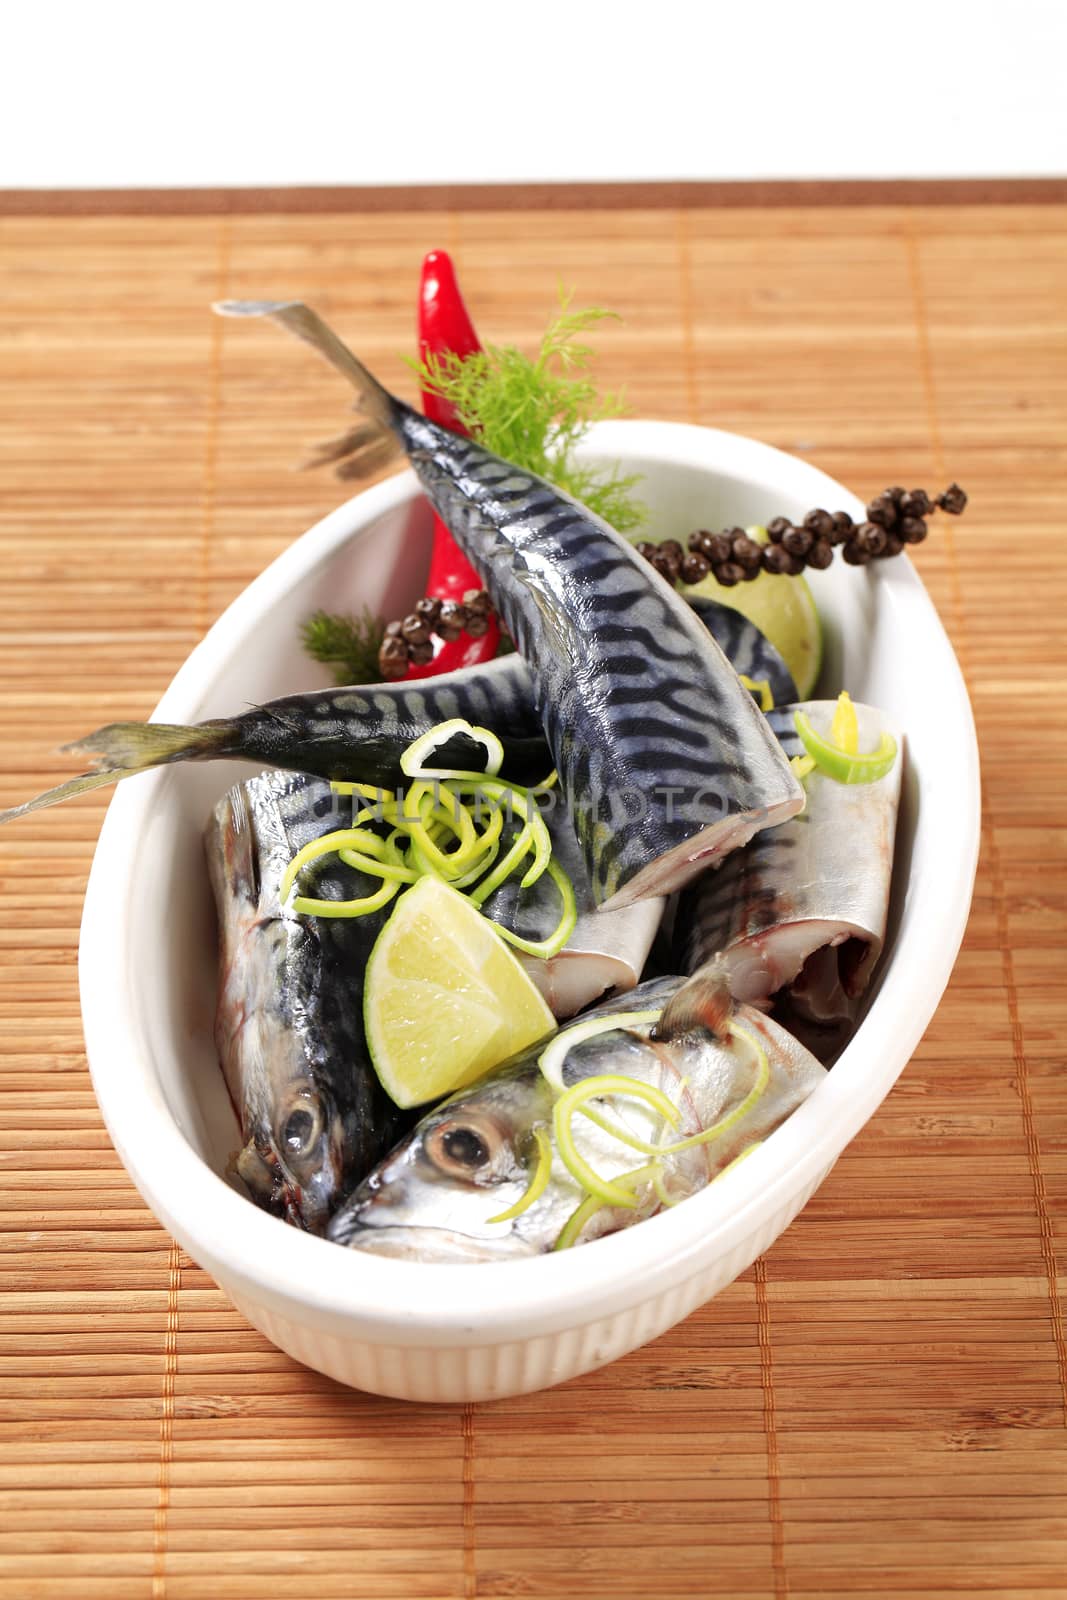 Raw mackerel by Digifoodstock